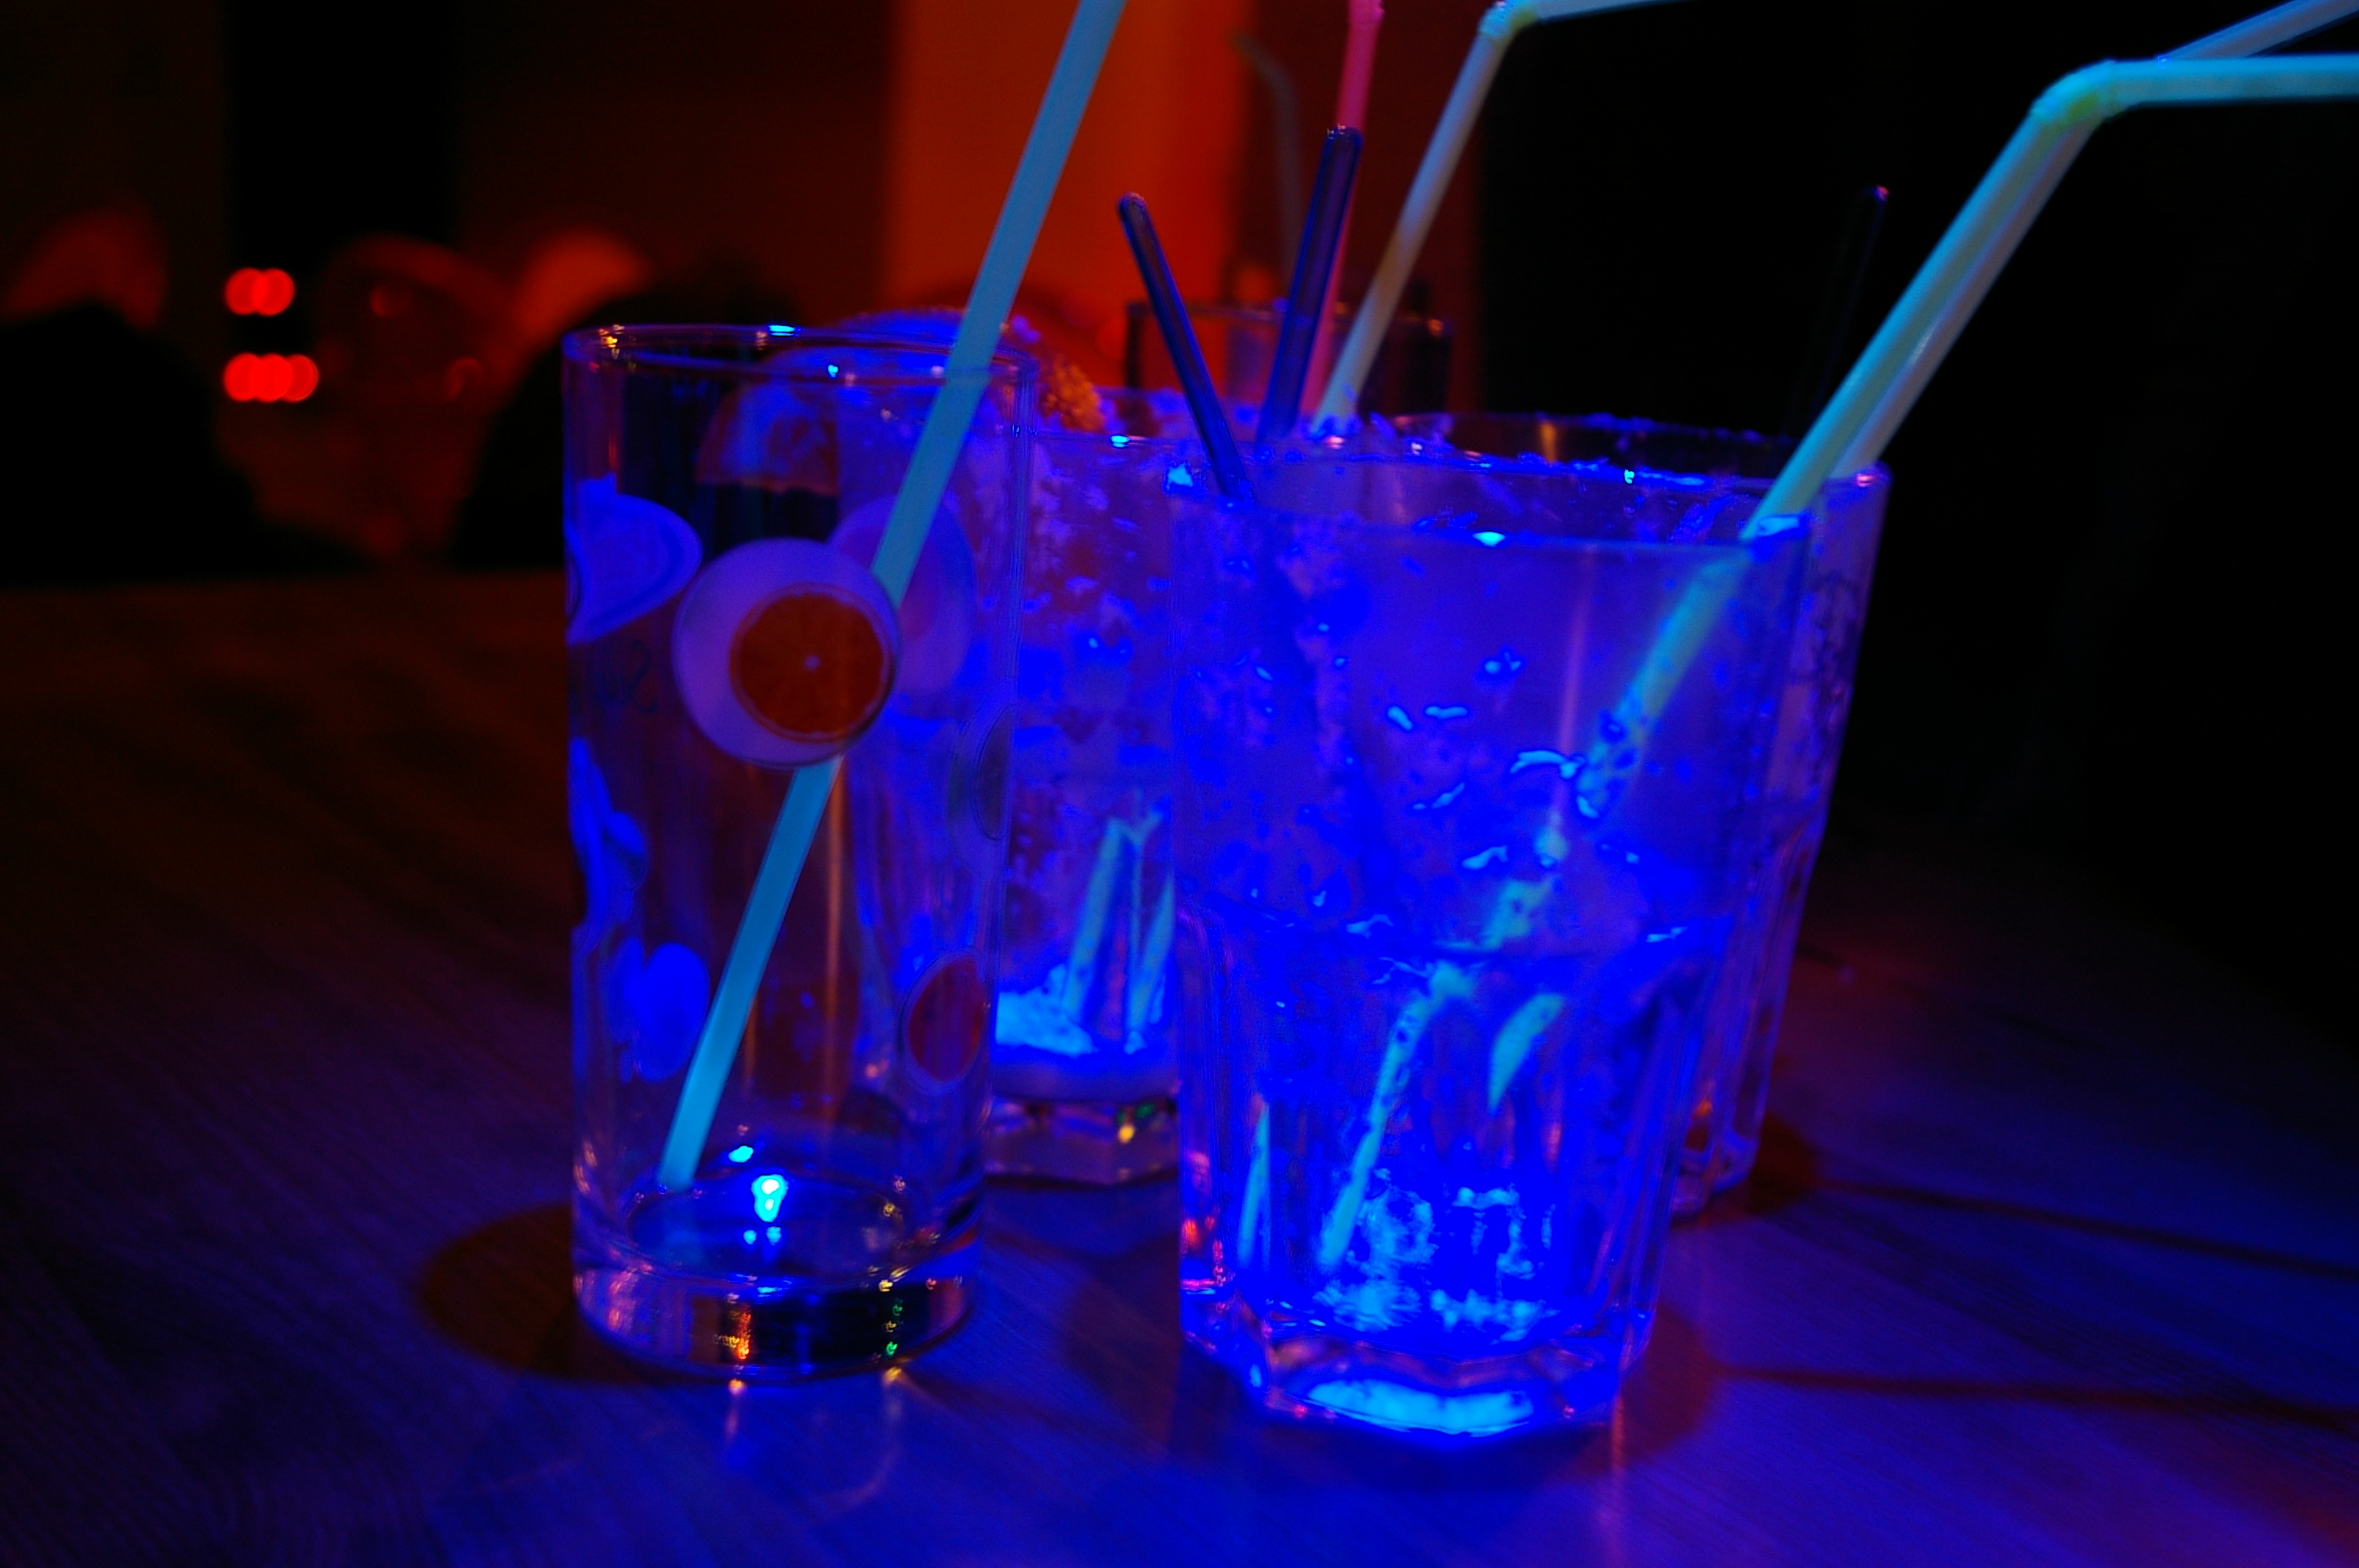 Cocktails photo